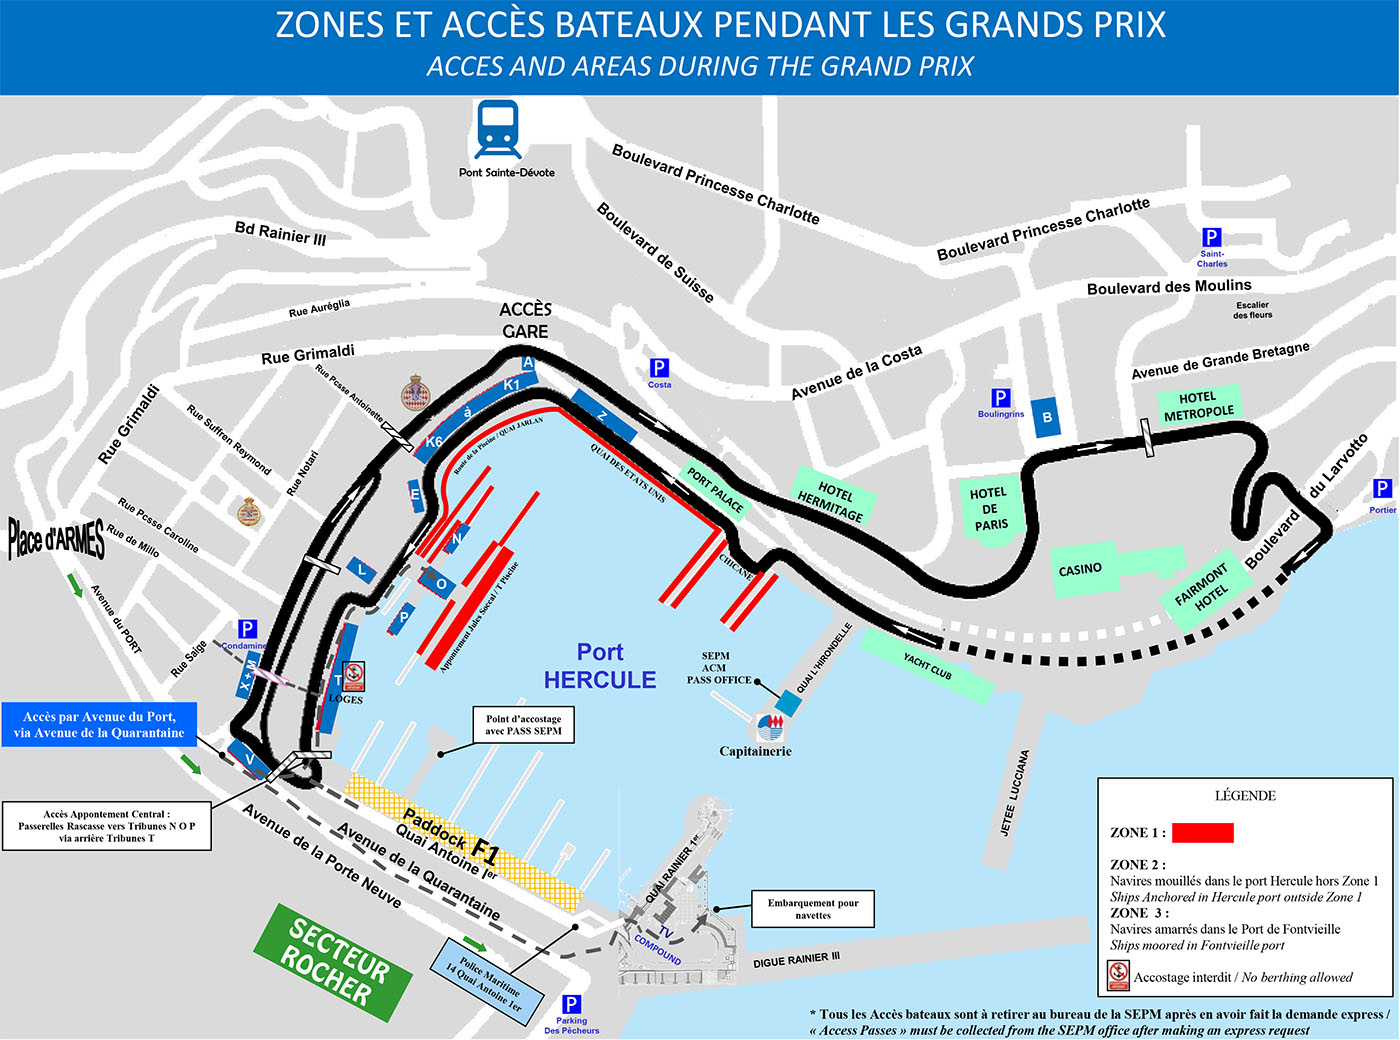 80th Formula 1 Grand Prix de Monaco - Automobile Club de Monaco